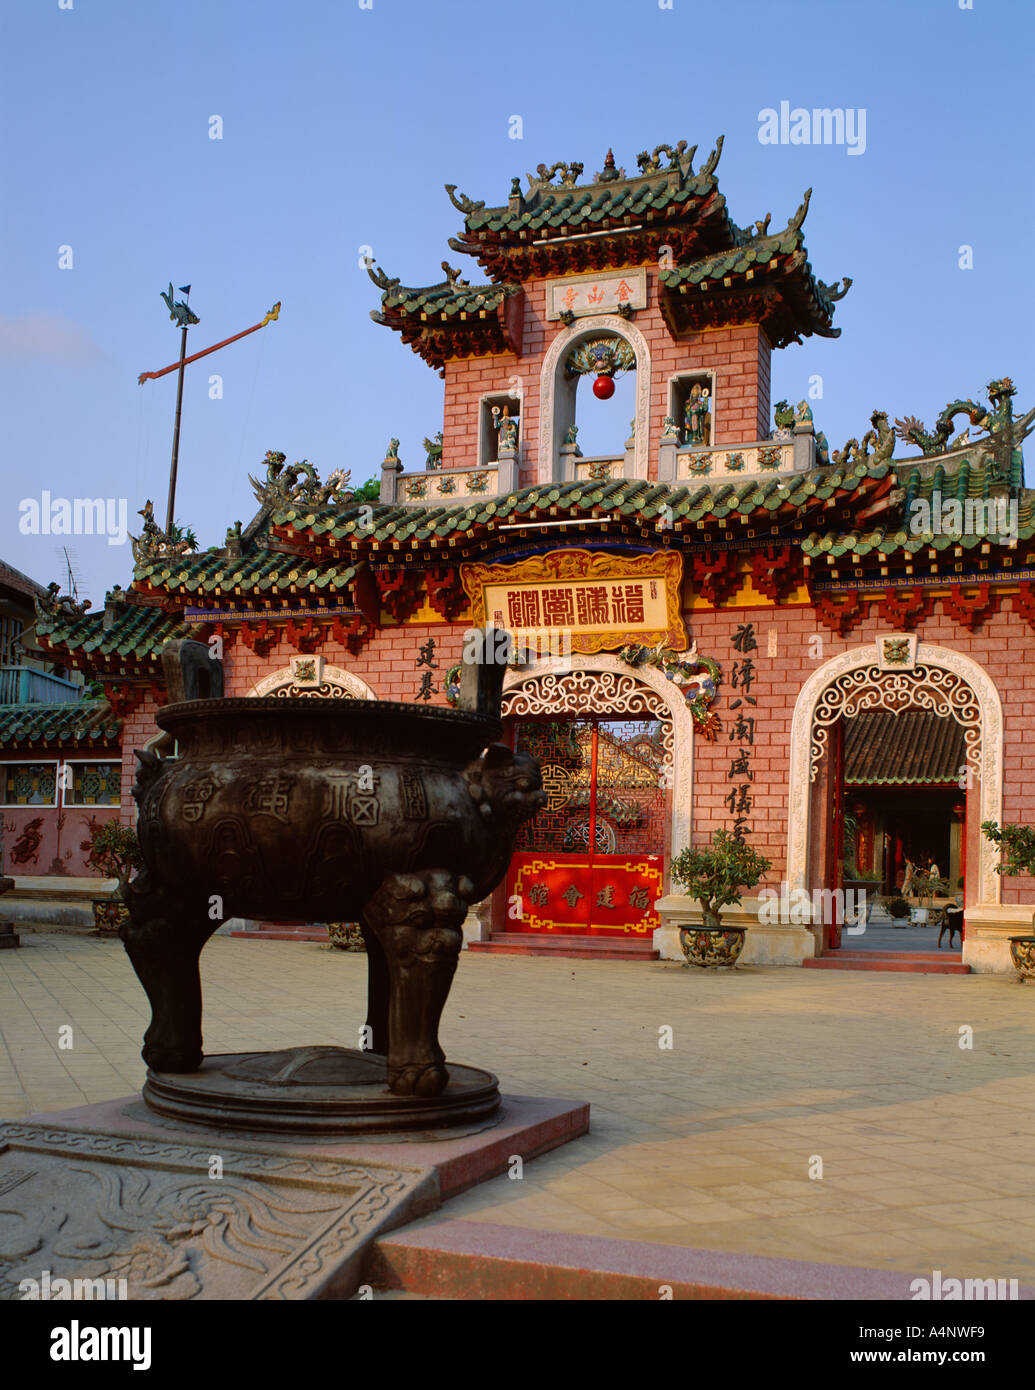 Il tempio Cinese Fukien Hoi An Vietnam Indocina Asia del sud-est asiatico Foto Stock